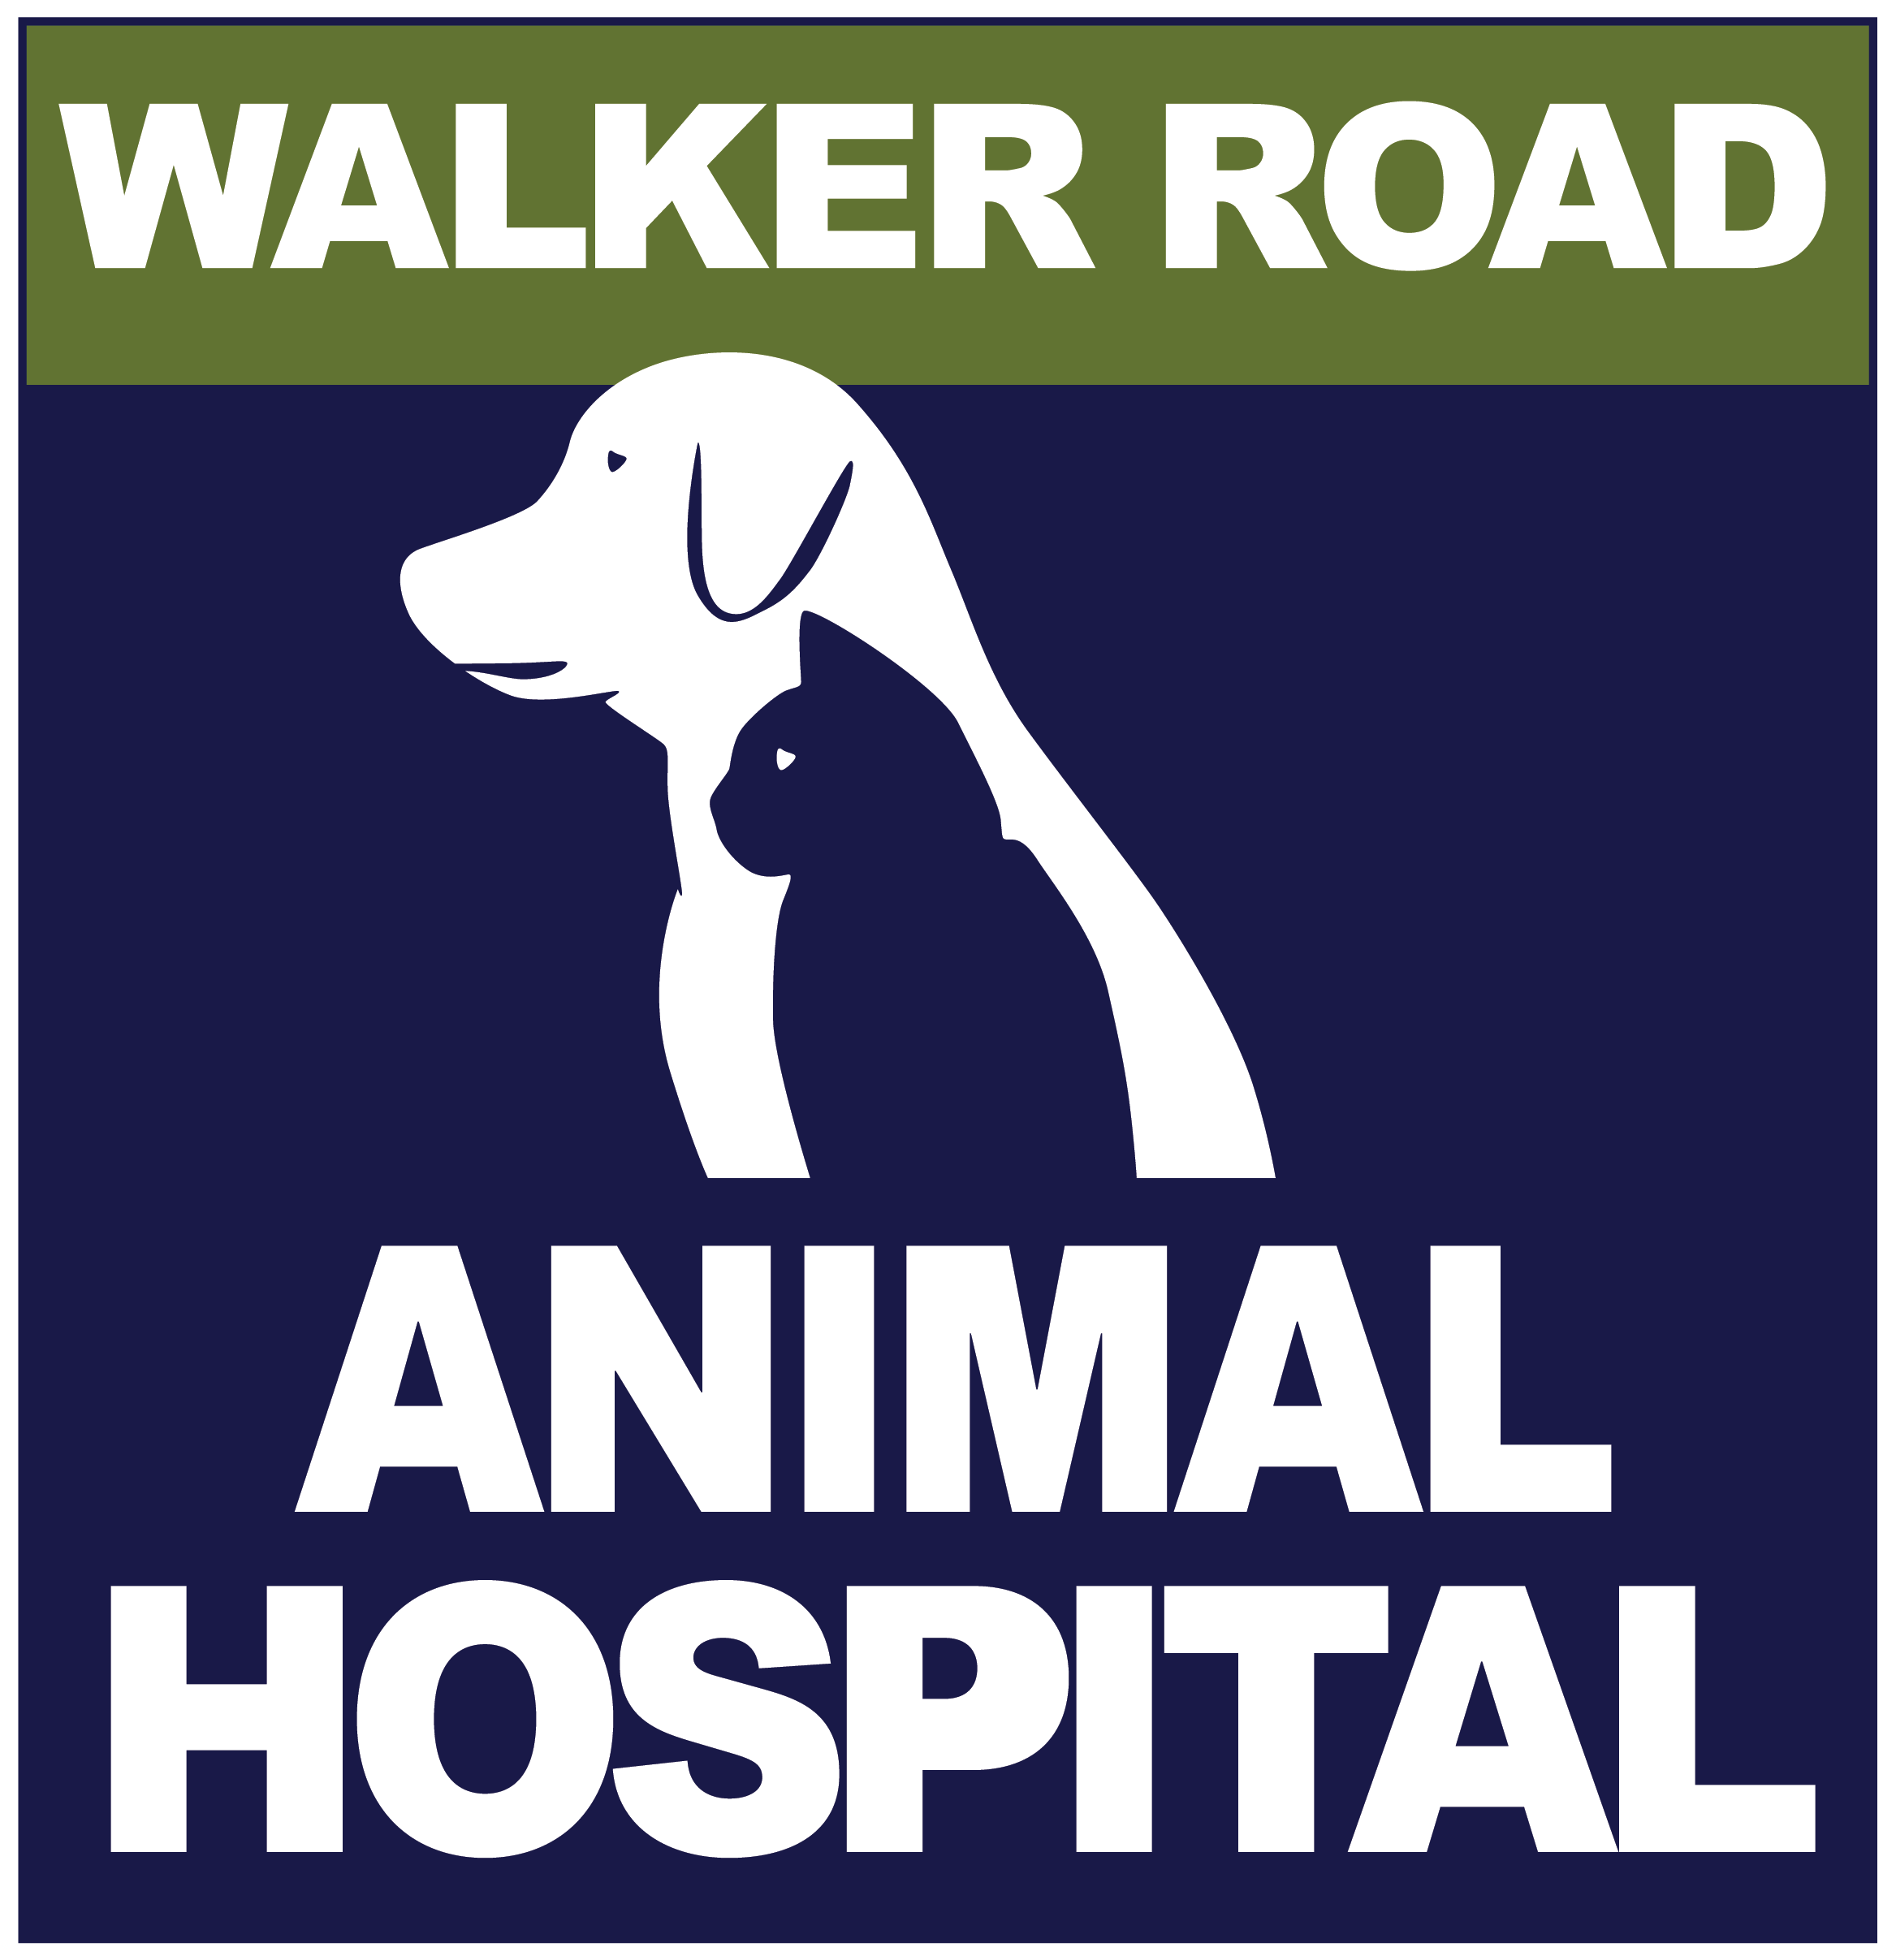 Walker Road Animal Hospital: Veterinarian in Windsor, ON